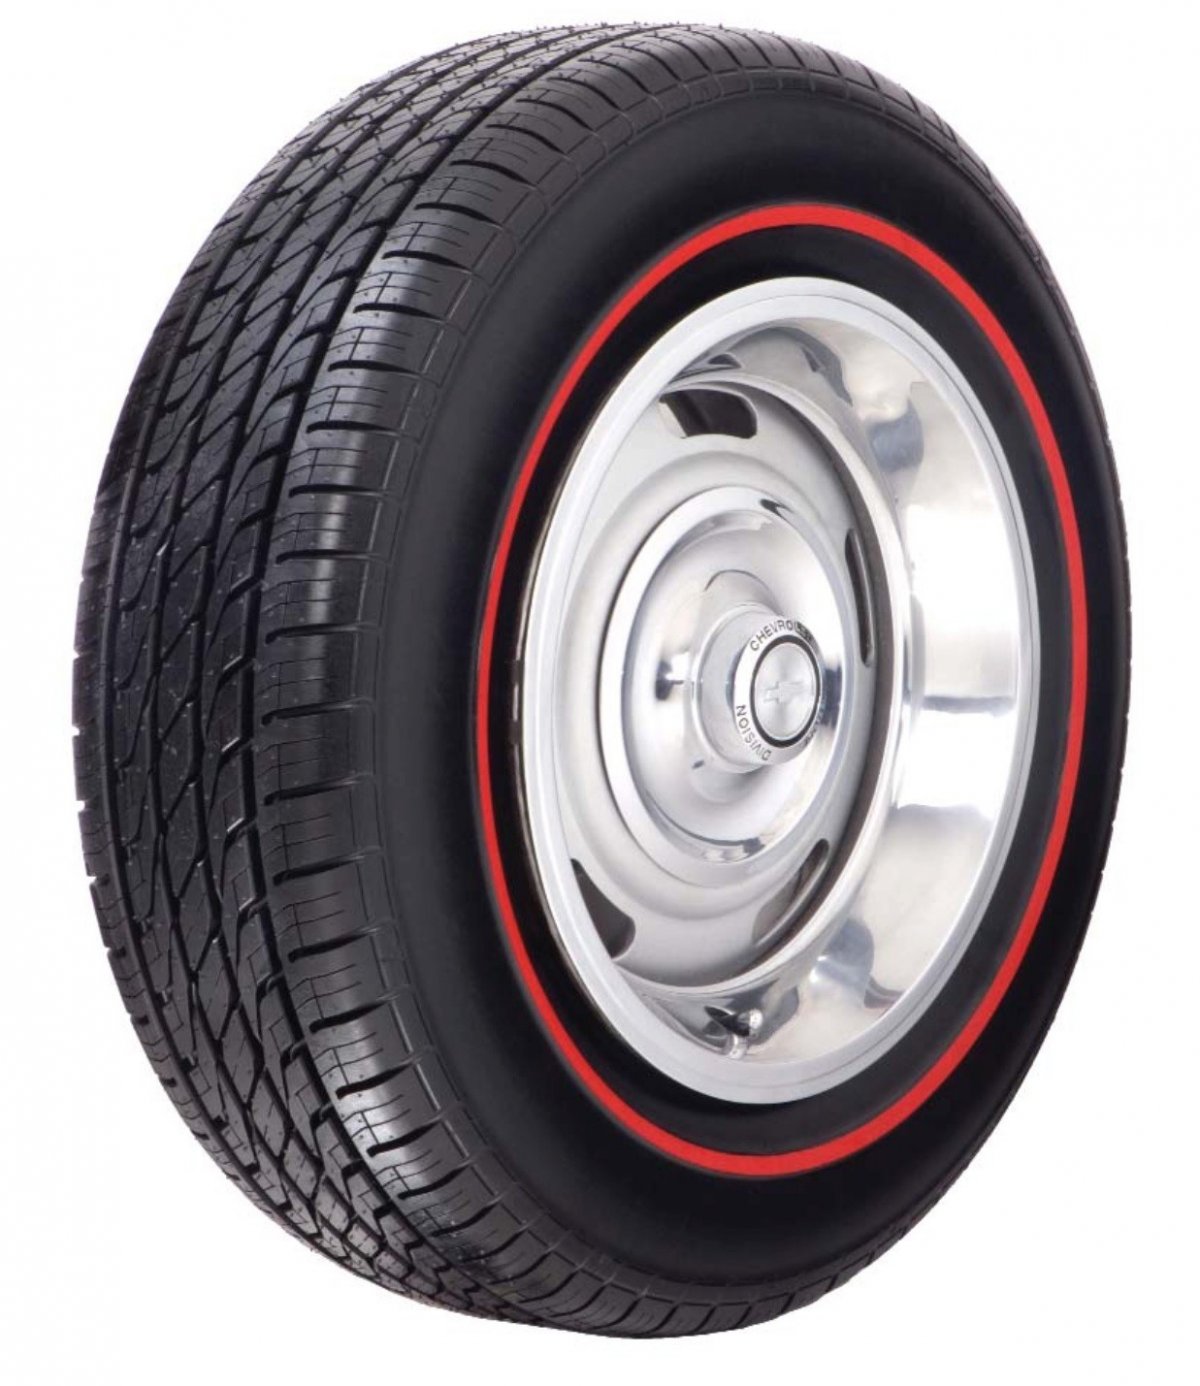 14 redline tires